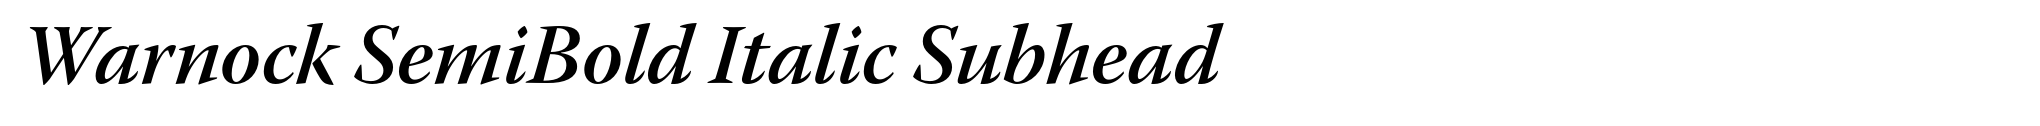 Warnock SemiBold Italic Subhead image